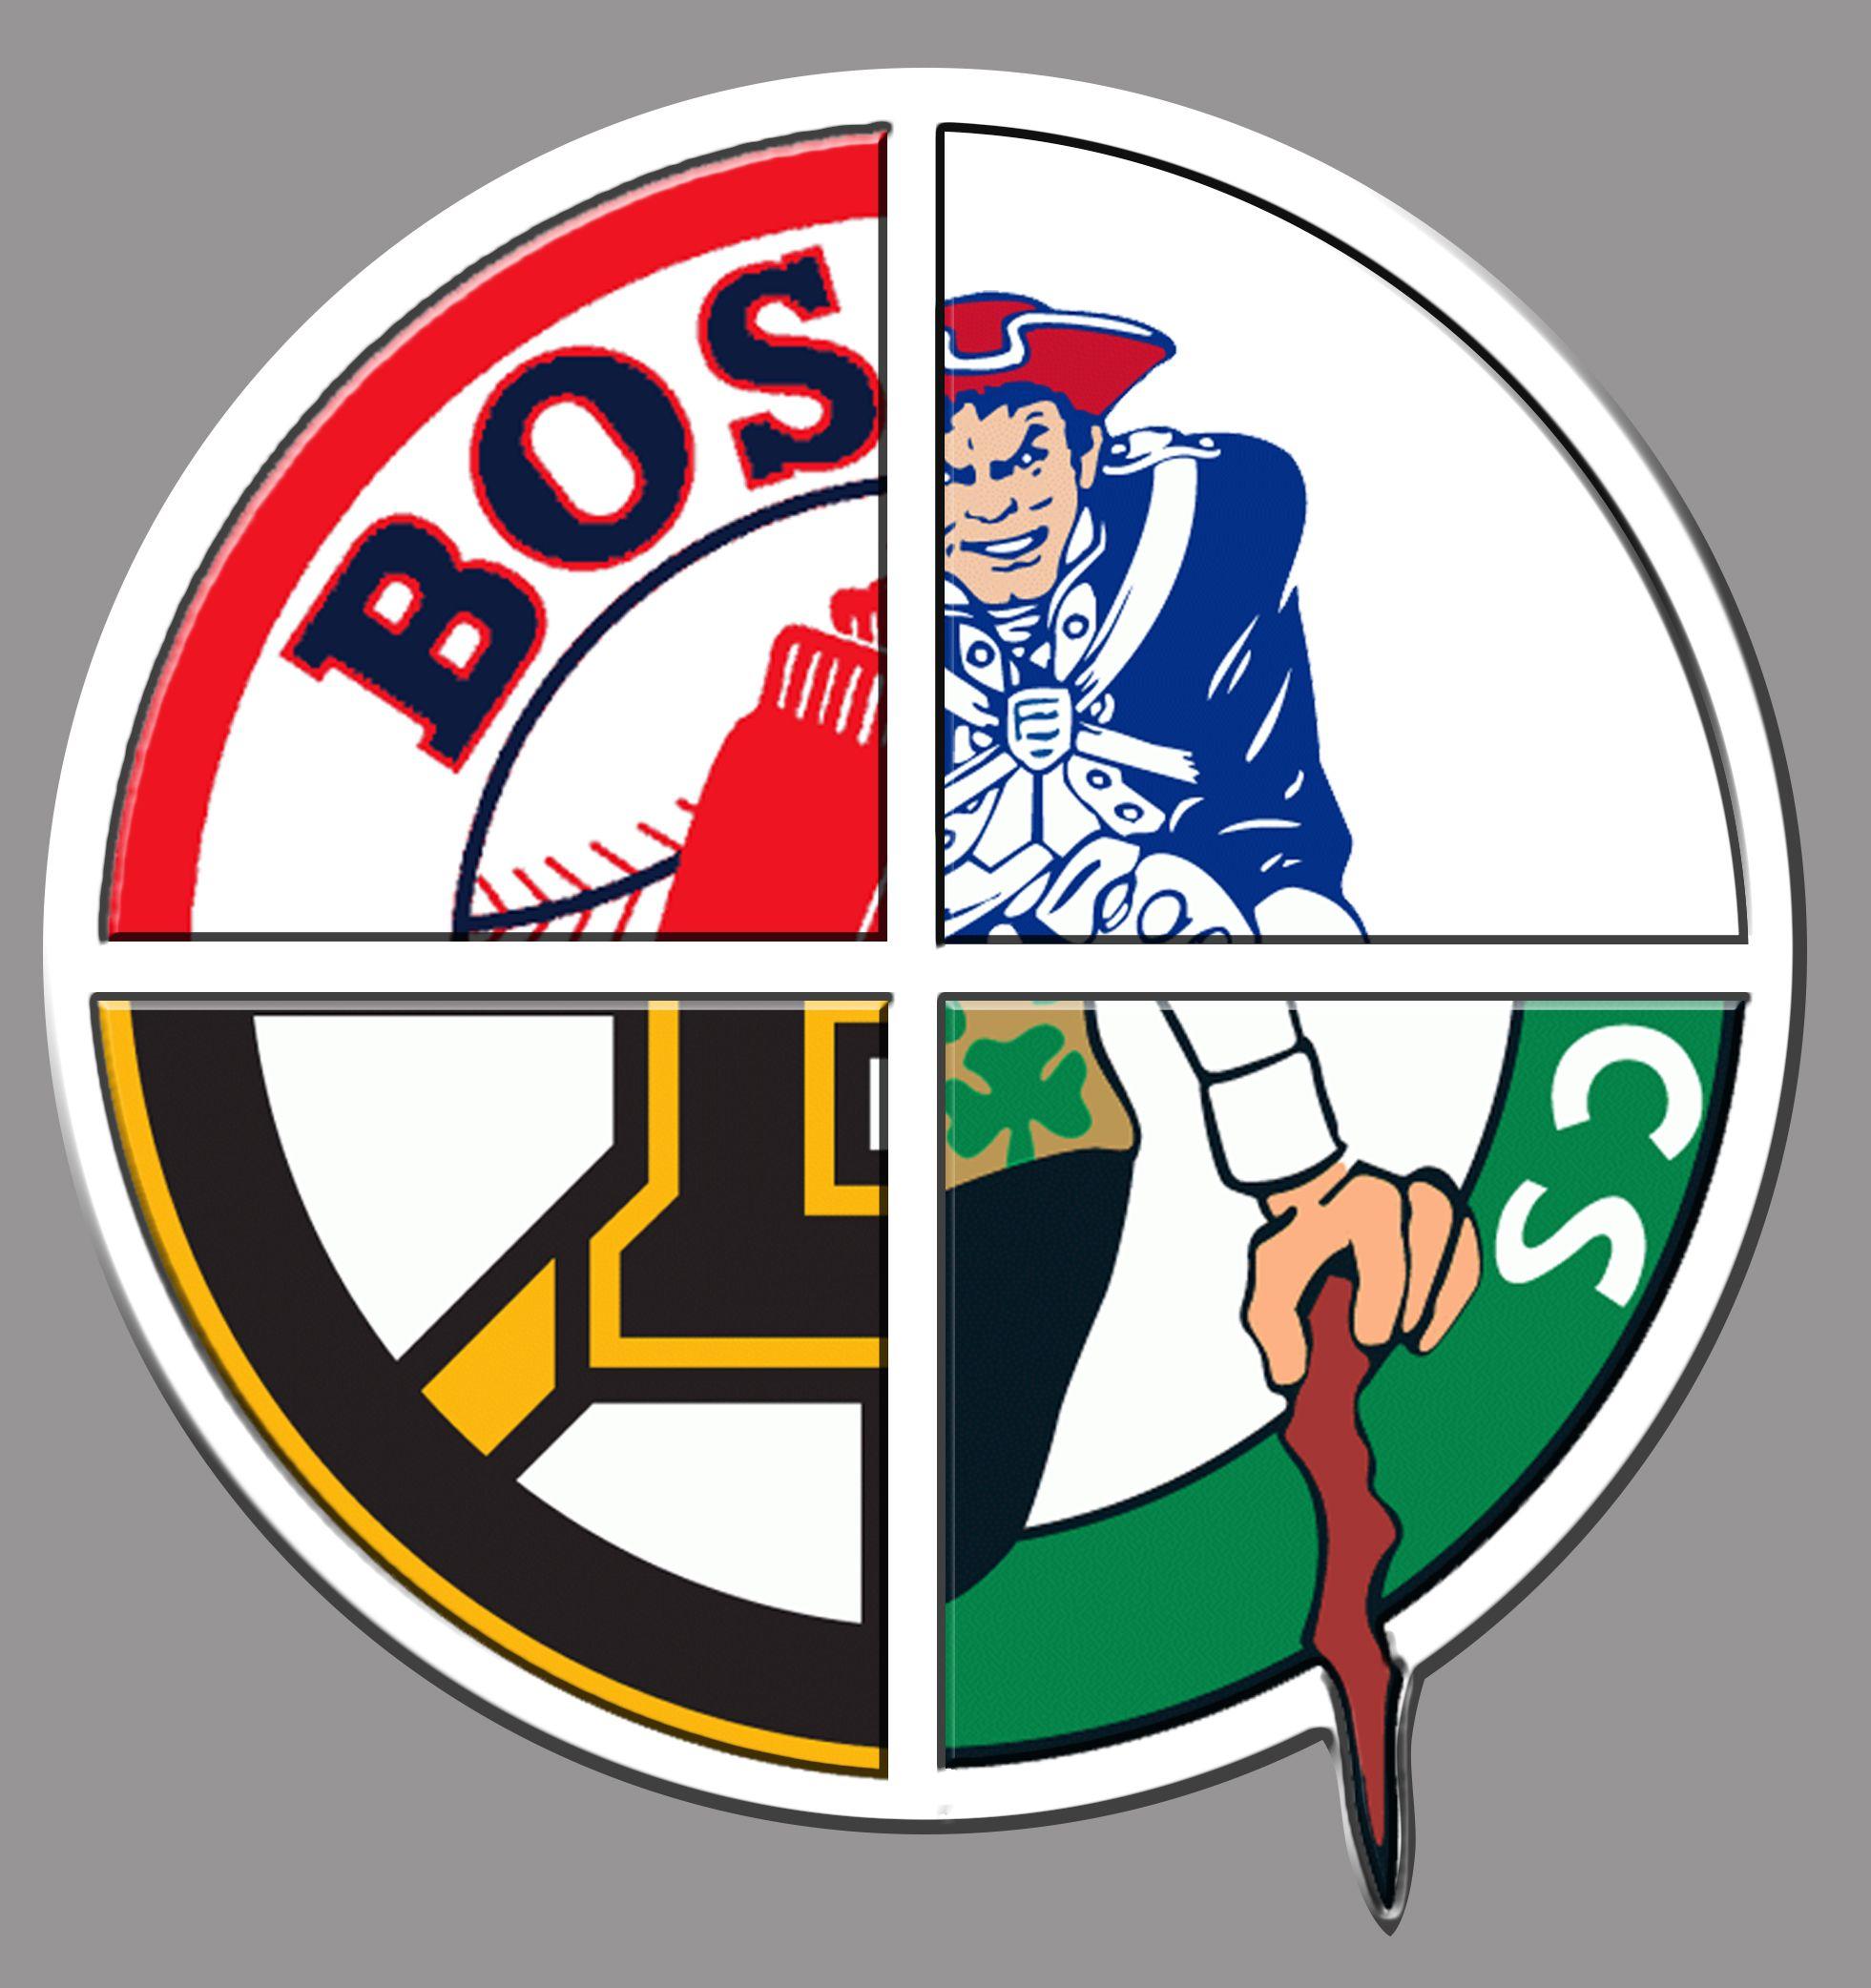 Boston Sports Logo - Image result for vintage sports logos for murals | jaffe boys ...